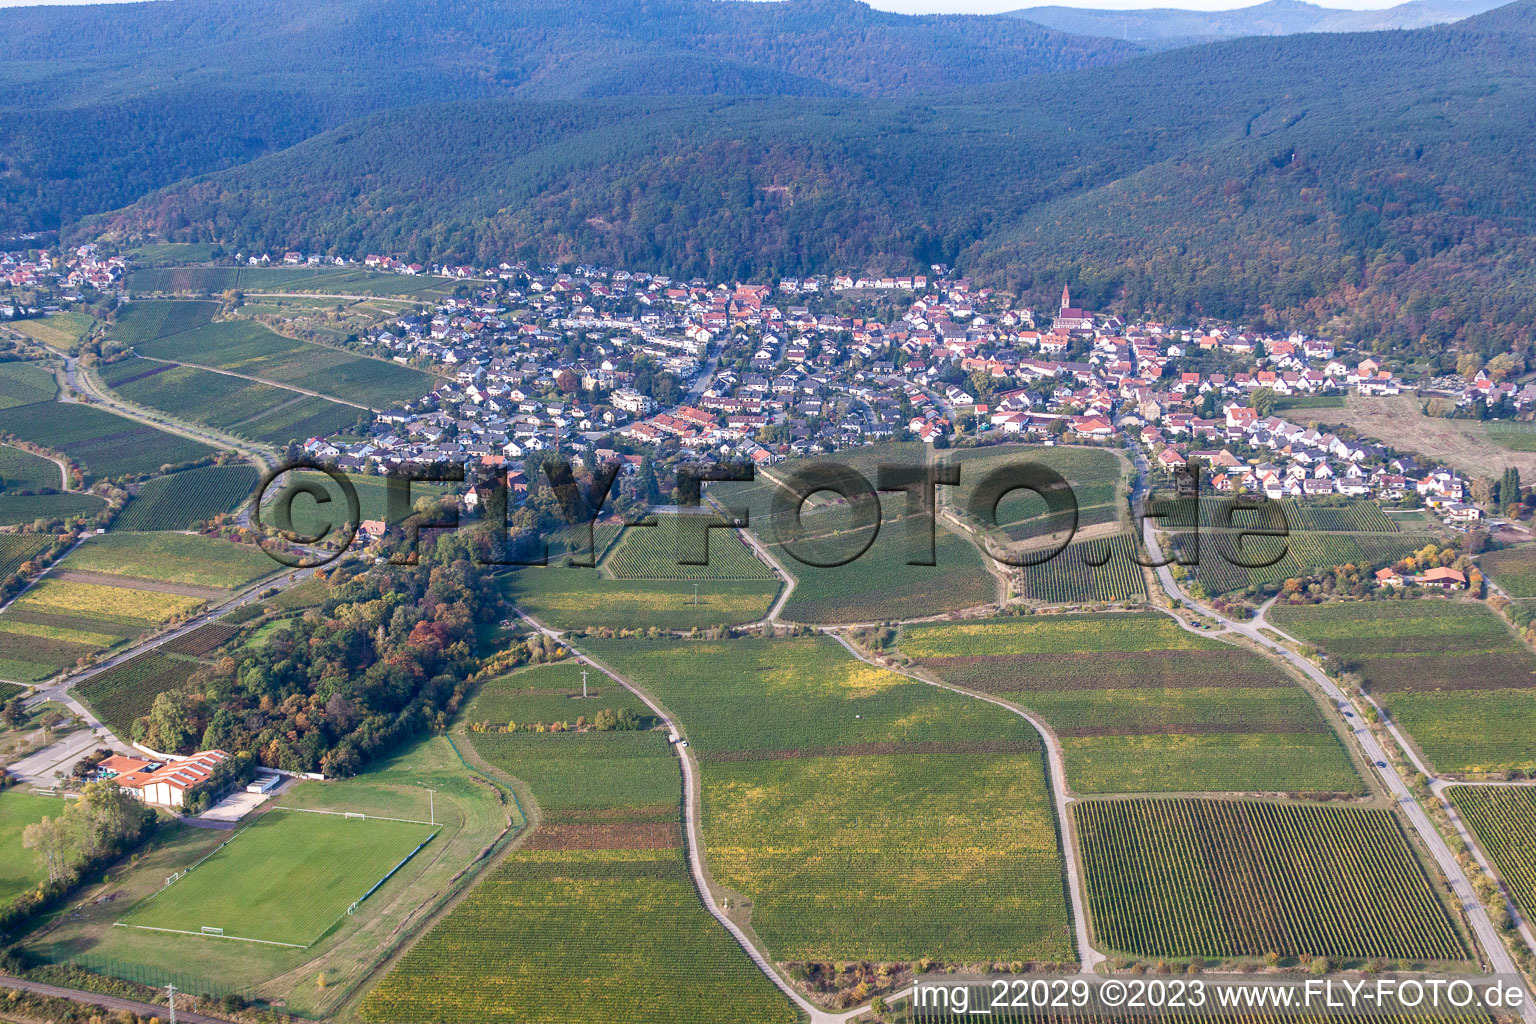 Drone recording of District Königsbach in Neustadt an der Weinstraße in the state Rhineland-Palatinate, Germany